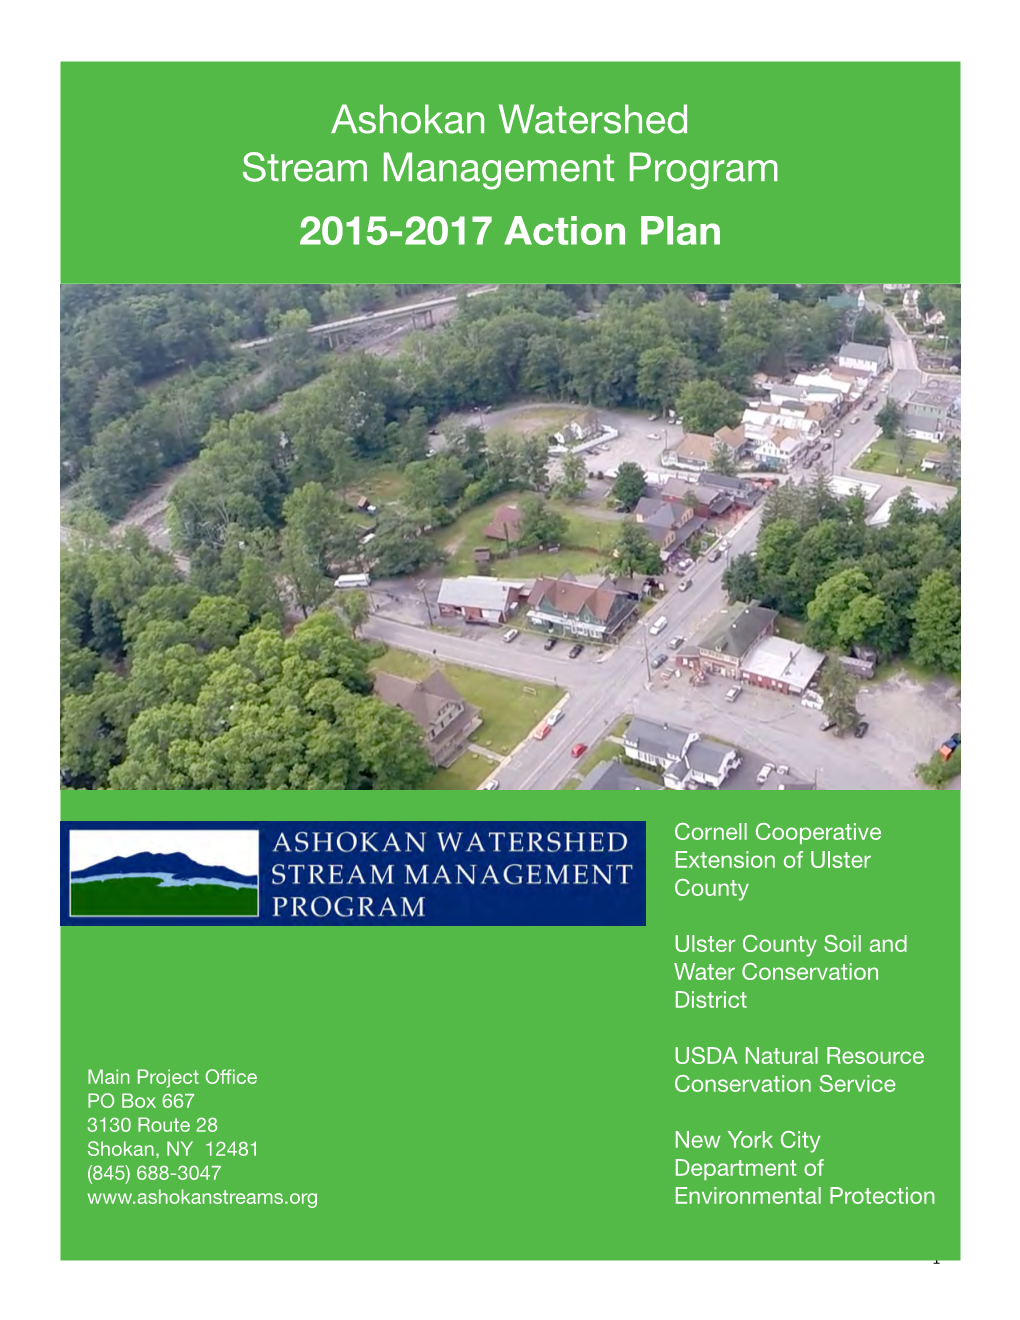 Ashokan Watershed Stream Management Program 2015-2017 Action Plan